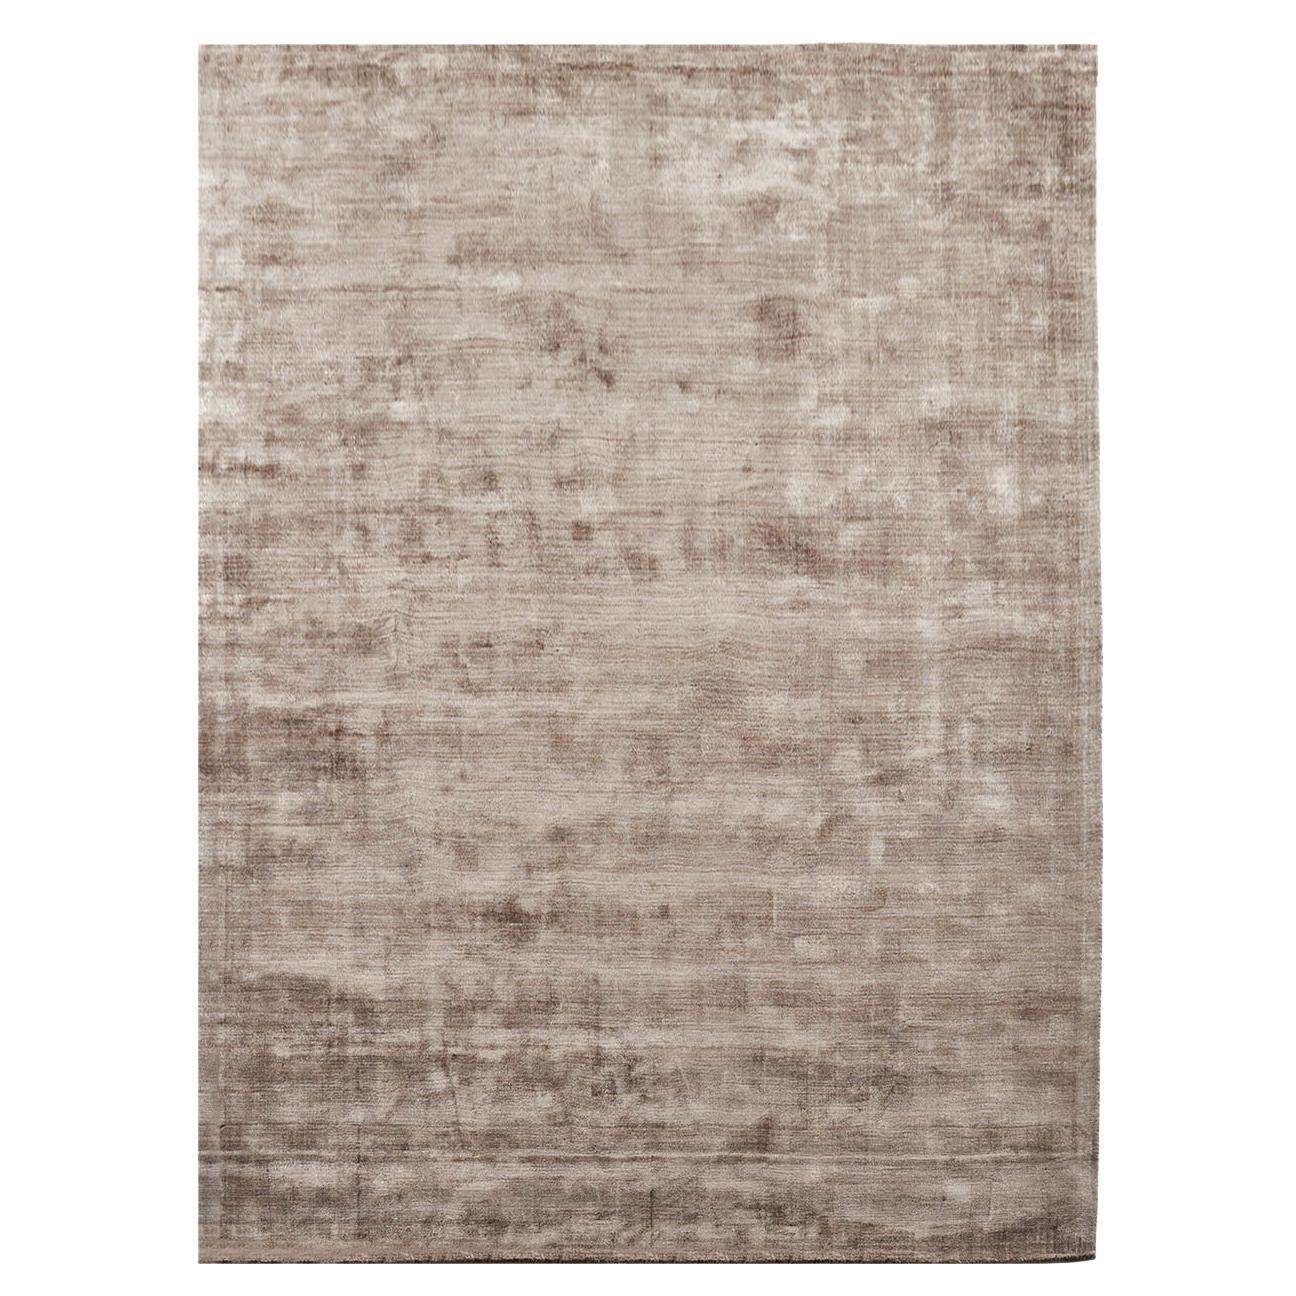 Nougat Brown Karma Carpet by Massimo Copenhagen